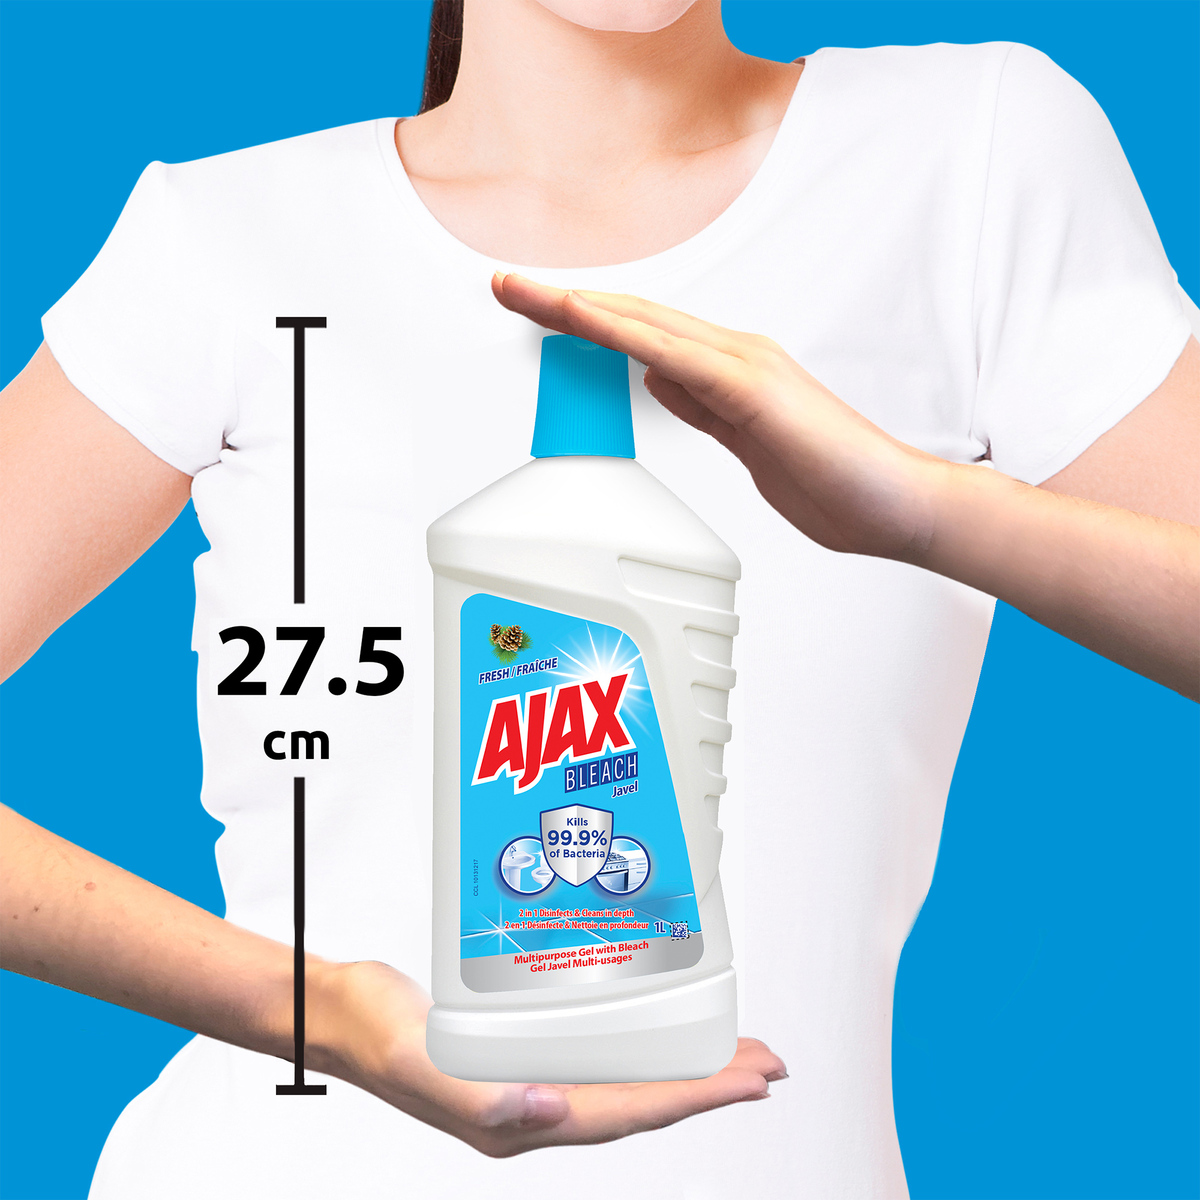 Ajax Multi-Purpose Gel With Bleach 1Litre